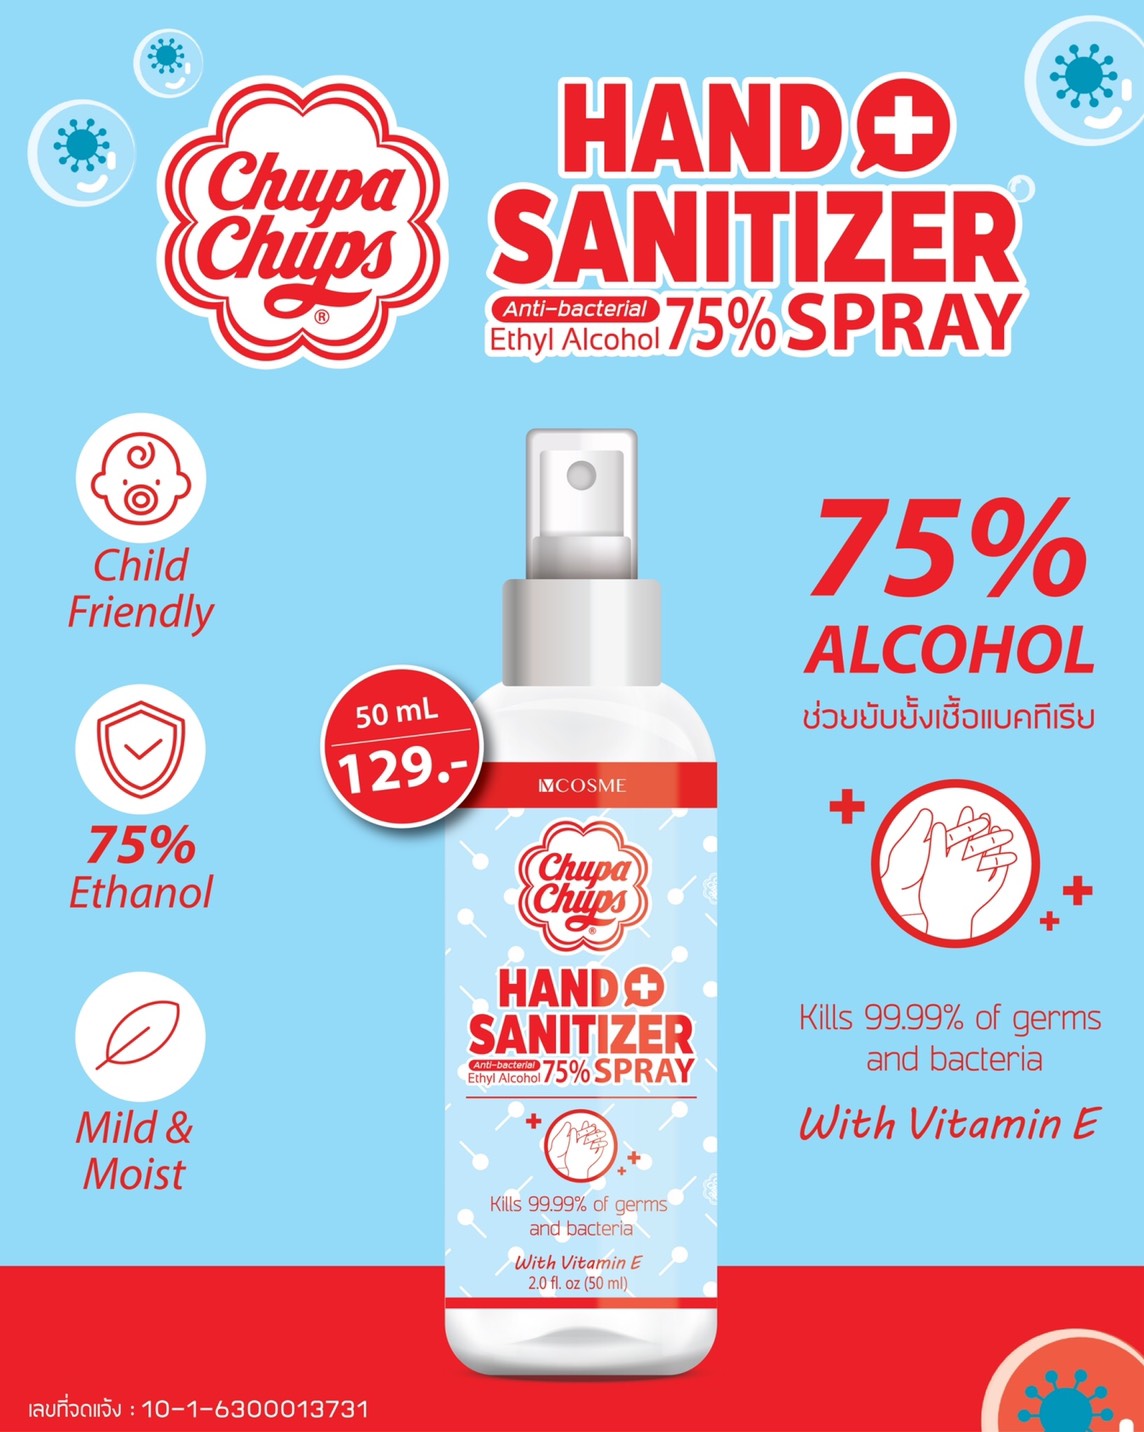 Chupa Chups Hand Sanitizer 75% Spray 50ml สเปย์แอลกอฮอลล์ 75% ลดการสะสมของเชื้อไวรัสและแบคทีเรีย